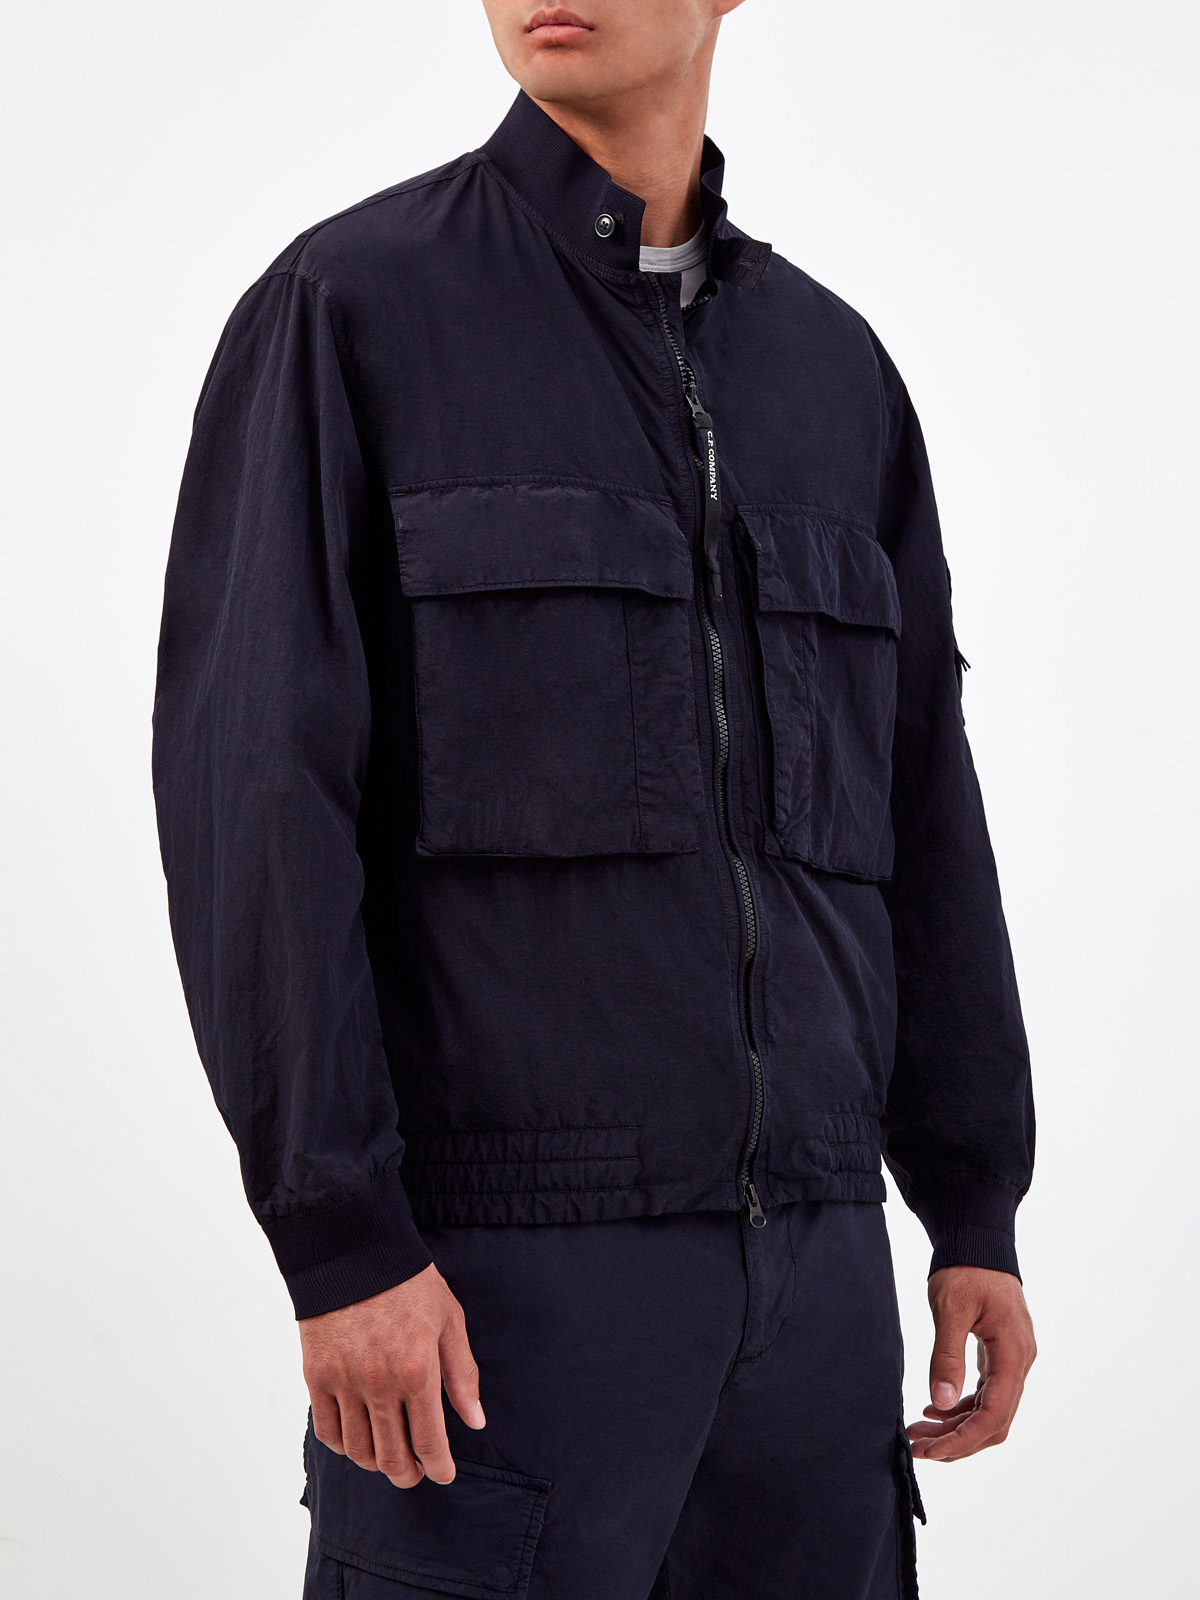 Куртка из окрашенного вручную нейлона Flatt Nylon с макро-карманами C.P.COMPANY, цвет синий, размер M;XL;L - фото 3